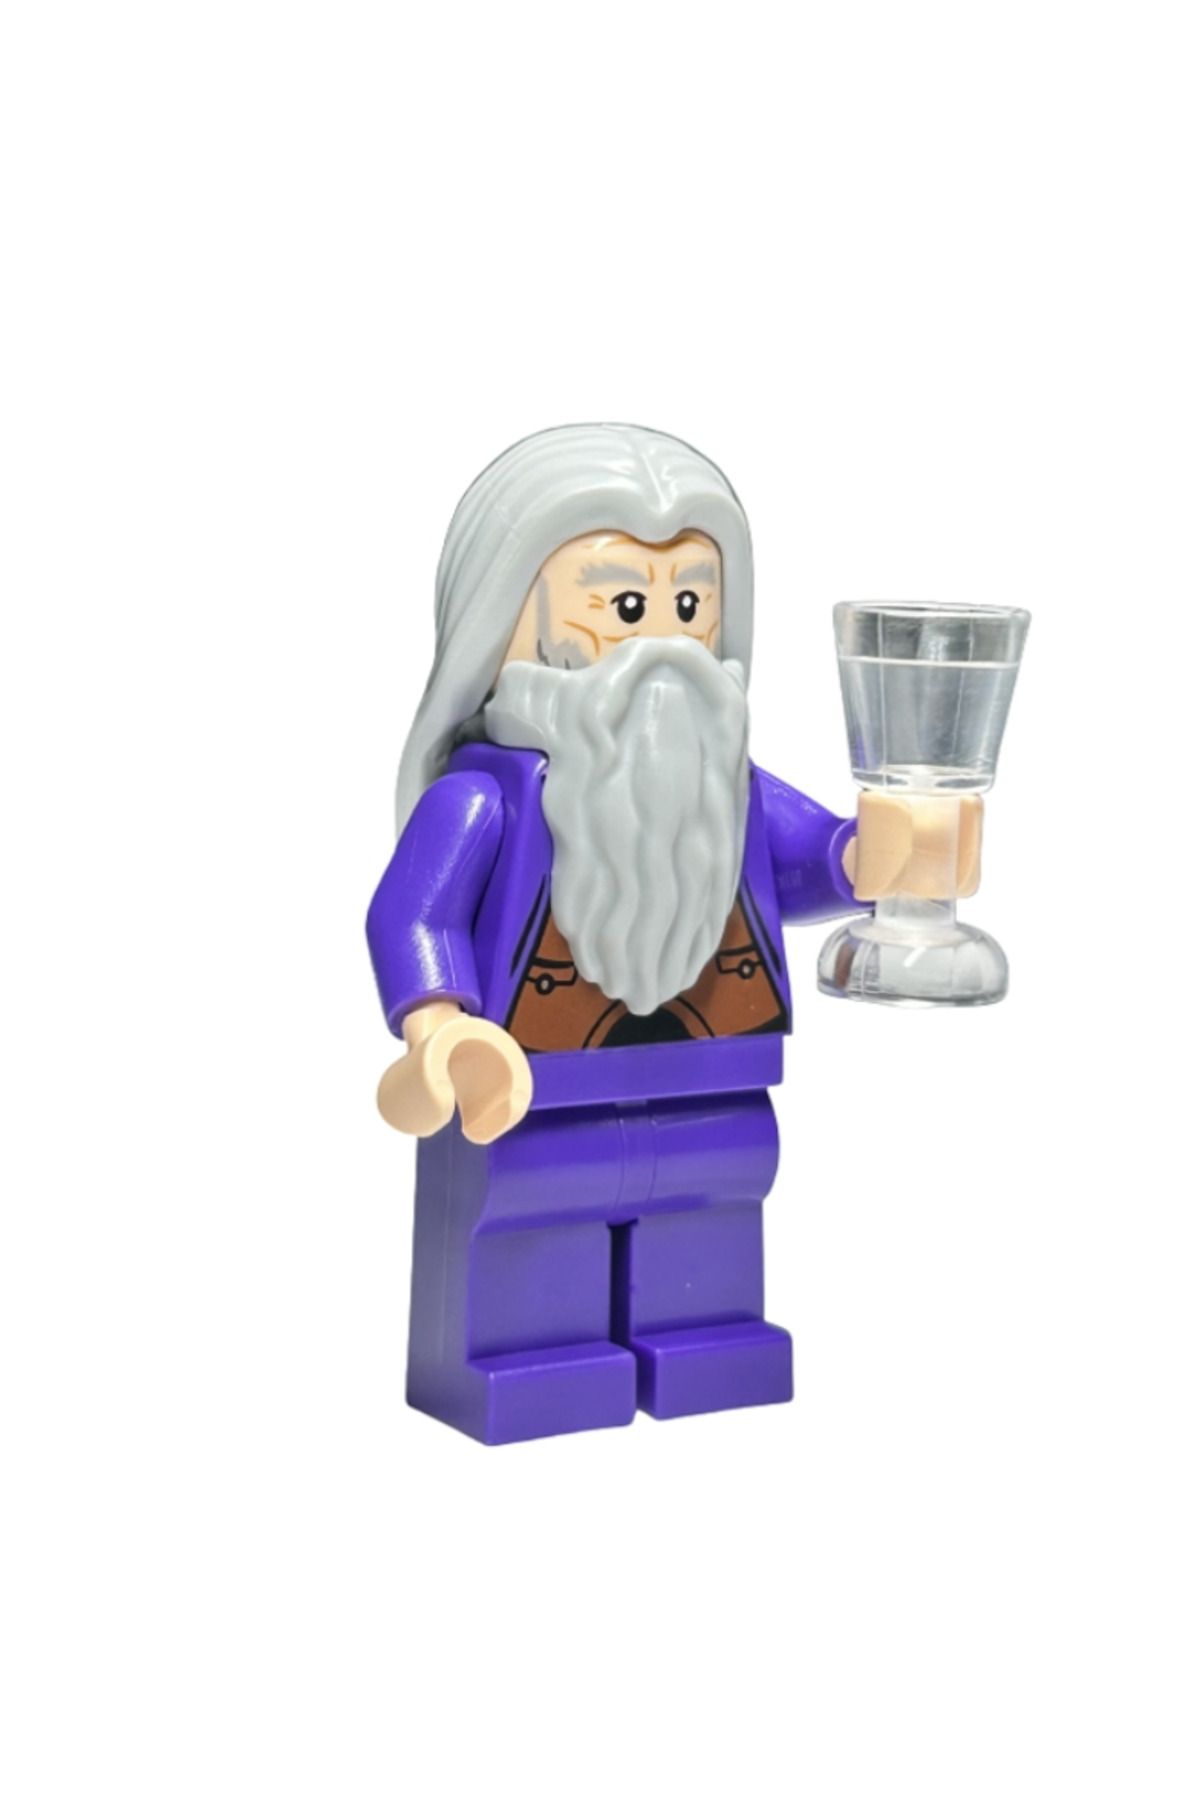 LEGO ریزساختارهای هری پاتر - روز سیزدهم آبرفورث دامبلدور با جام CV170